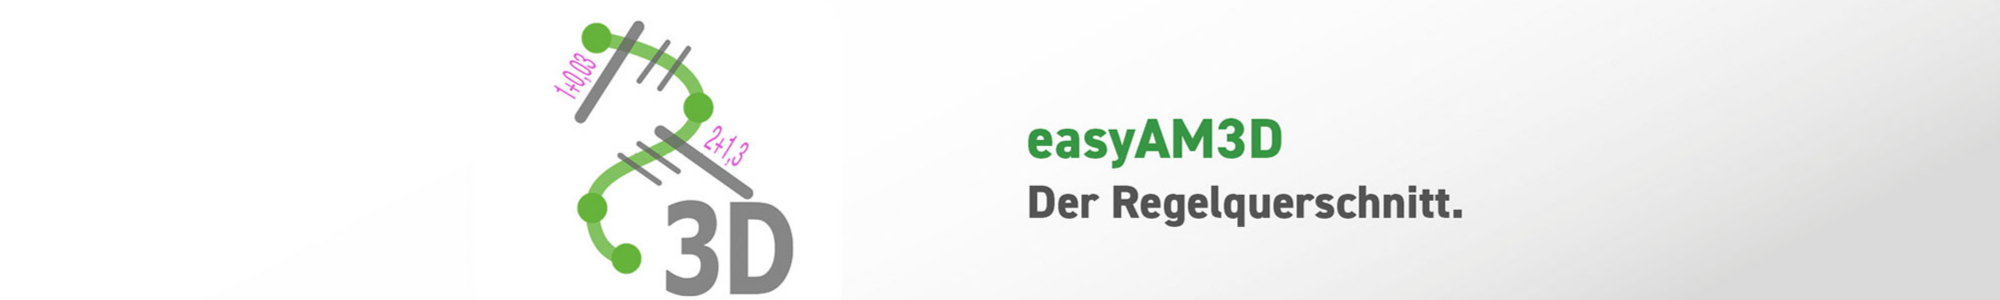 easyAM 3D - isl-kocher GmbH